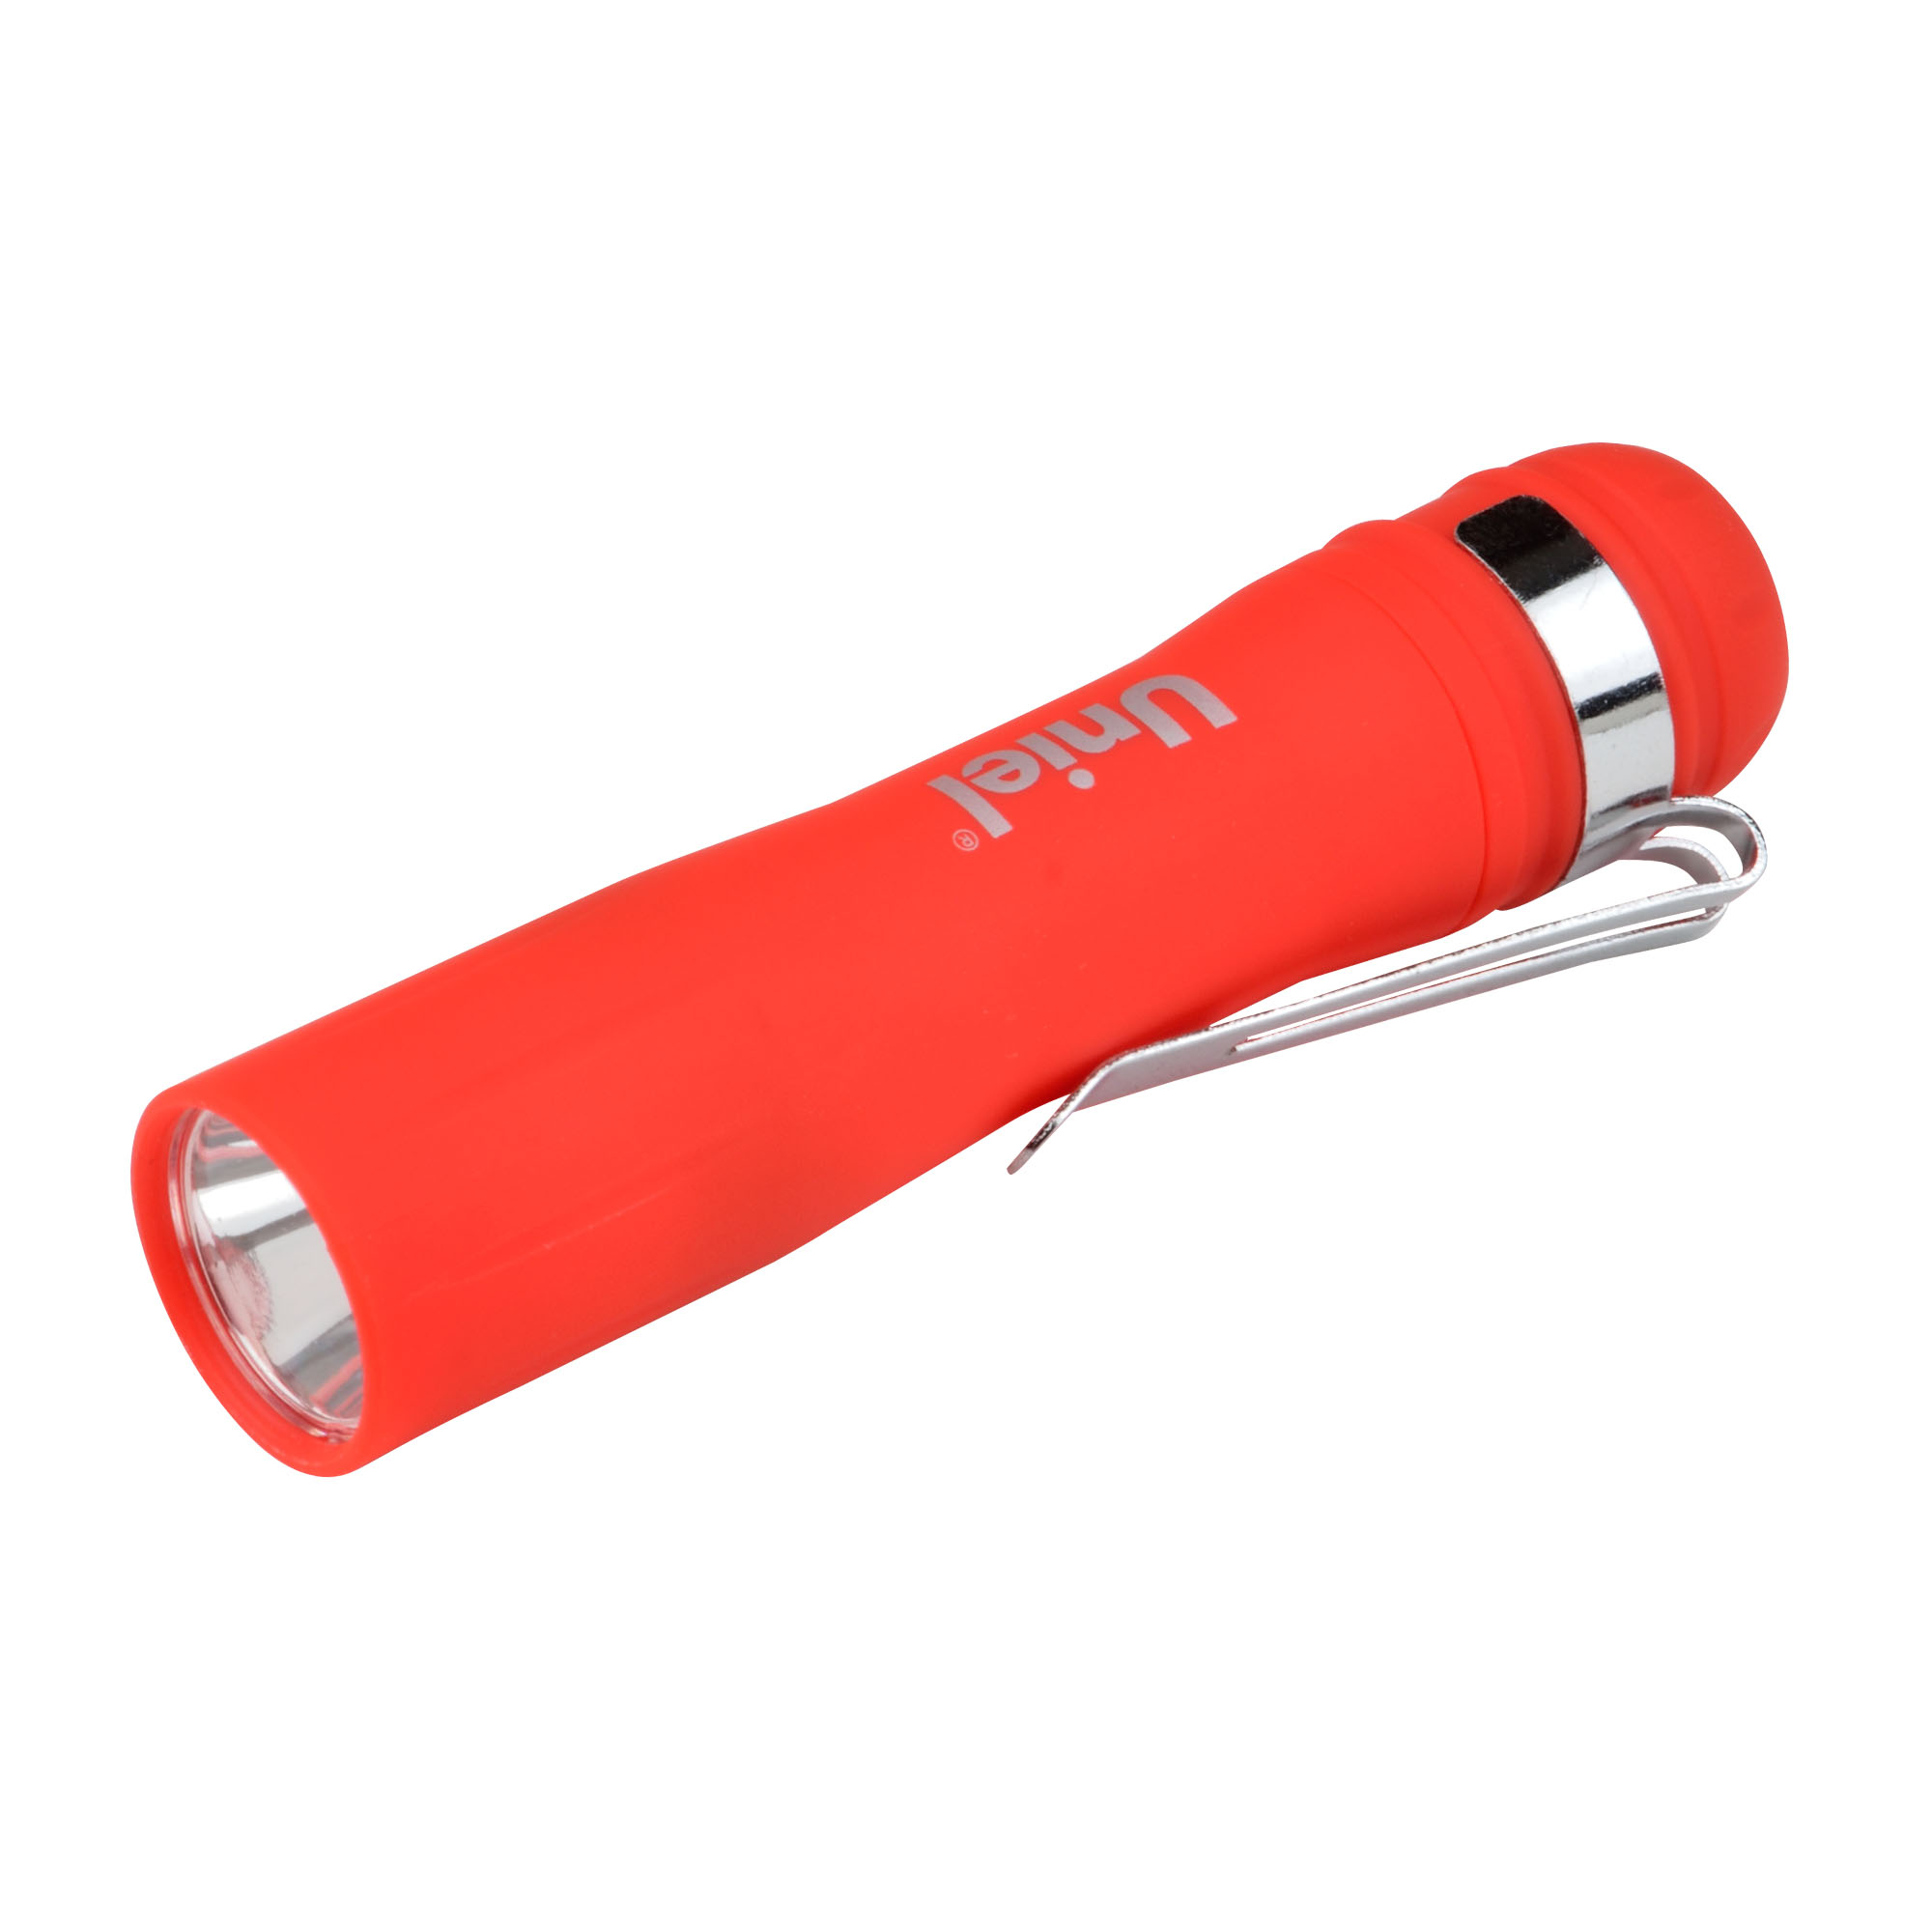 S-LD045-B Red Фонарь Uniel серии Стандарт Simple Light Debut. пластиковый корпус. 0.5 Watt LED. упаковка блистер. 1хАА н-к. цвет красный